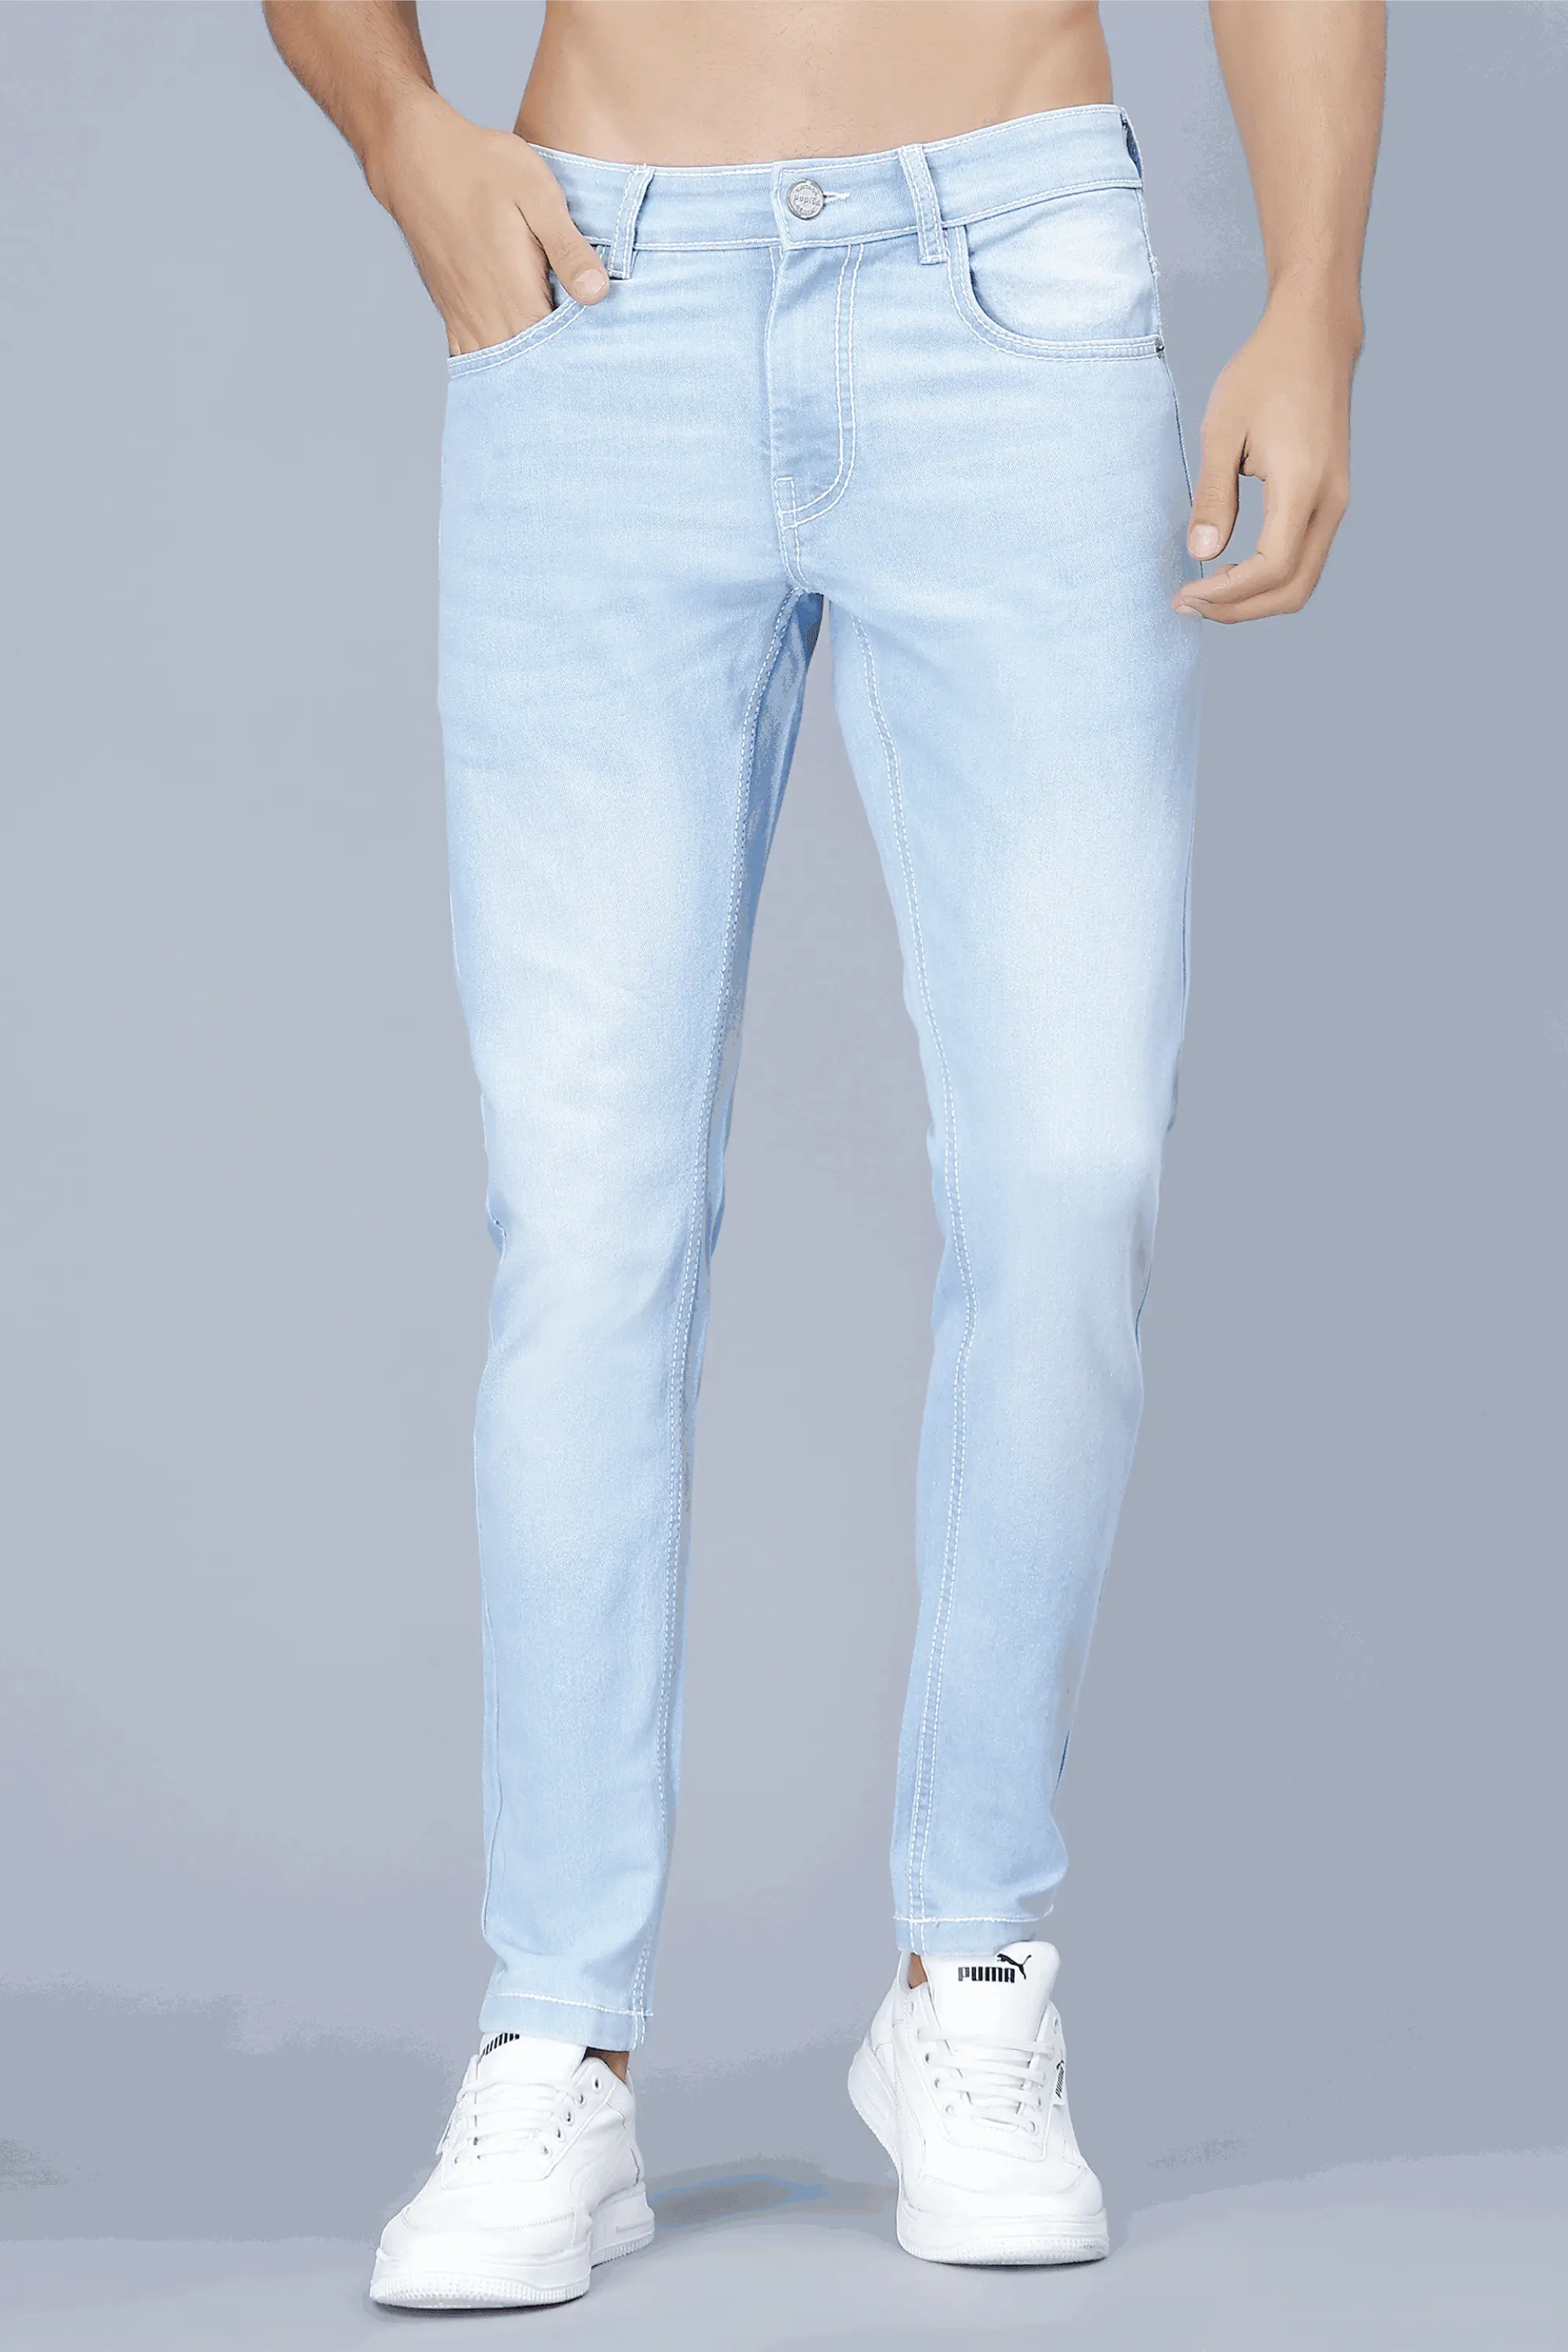 BADMAASH Skinny Men Light Blue Jeans - Buy BADMAASH Skinny Men Light Blue  Jeans Online at Best Prices in India | Flipkart.com